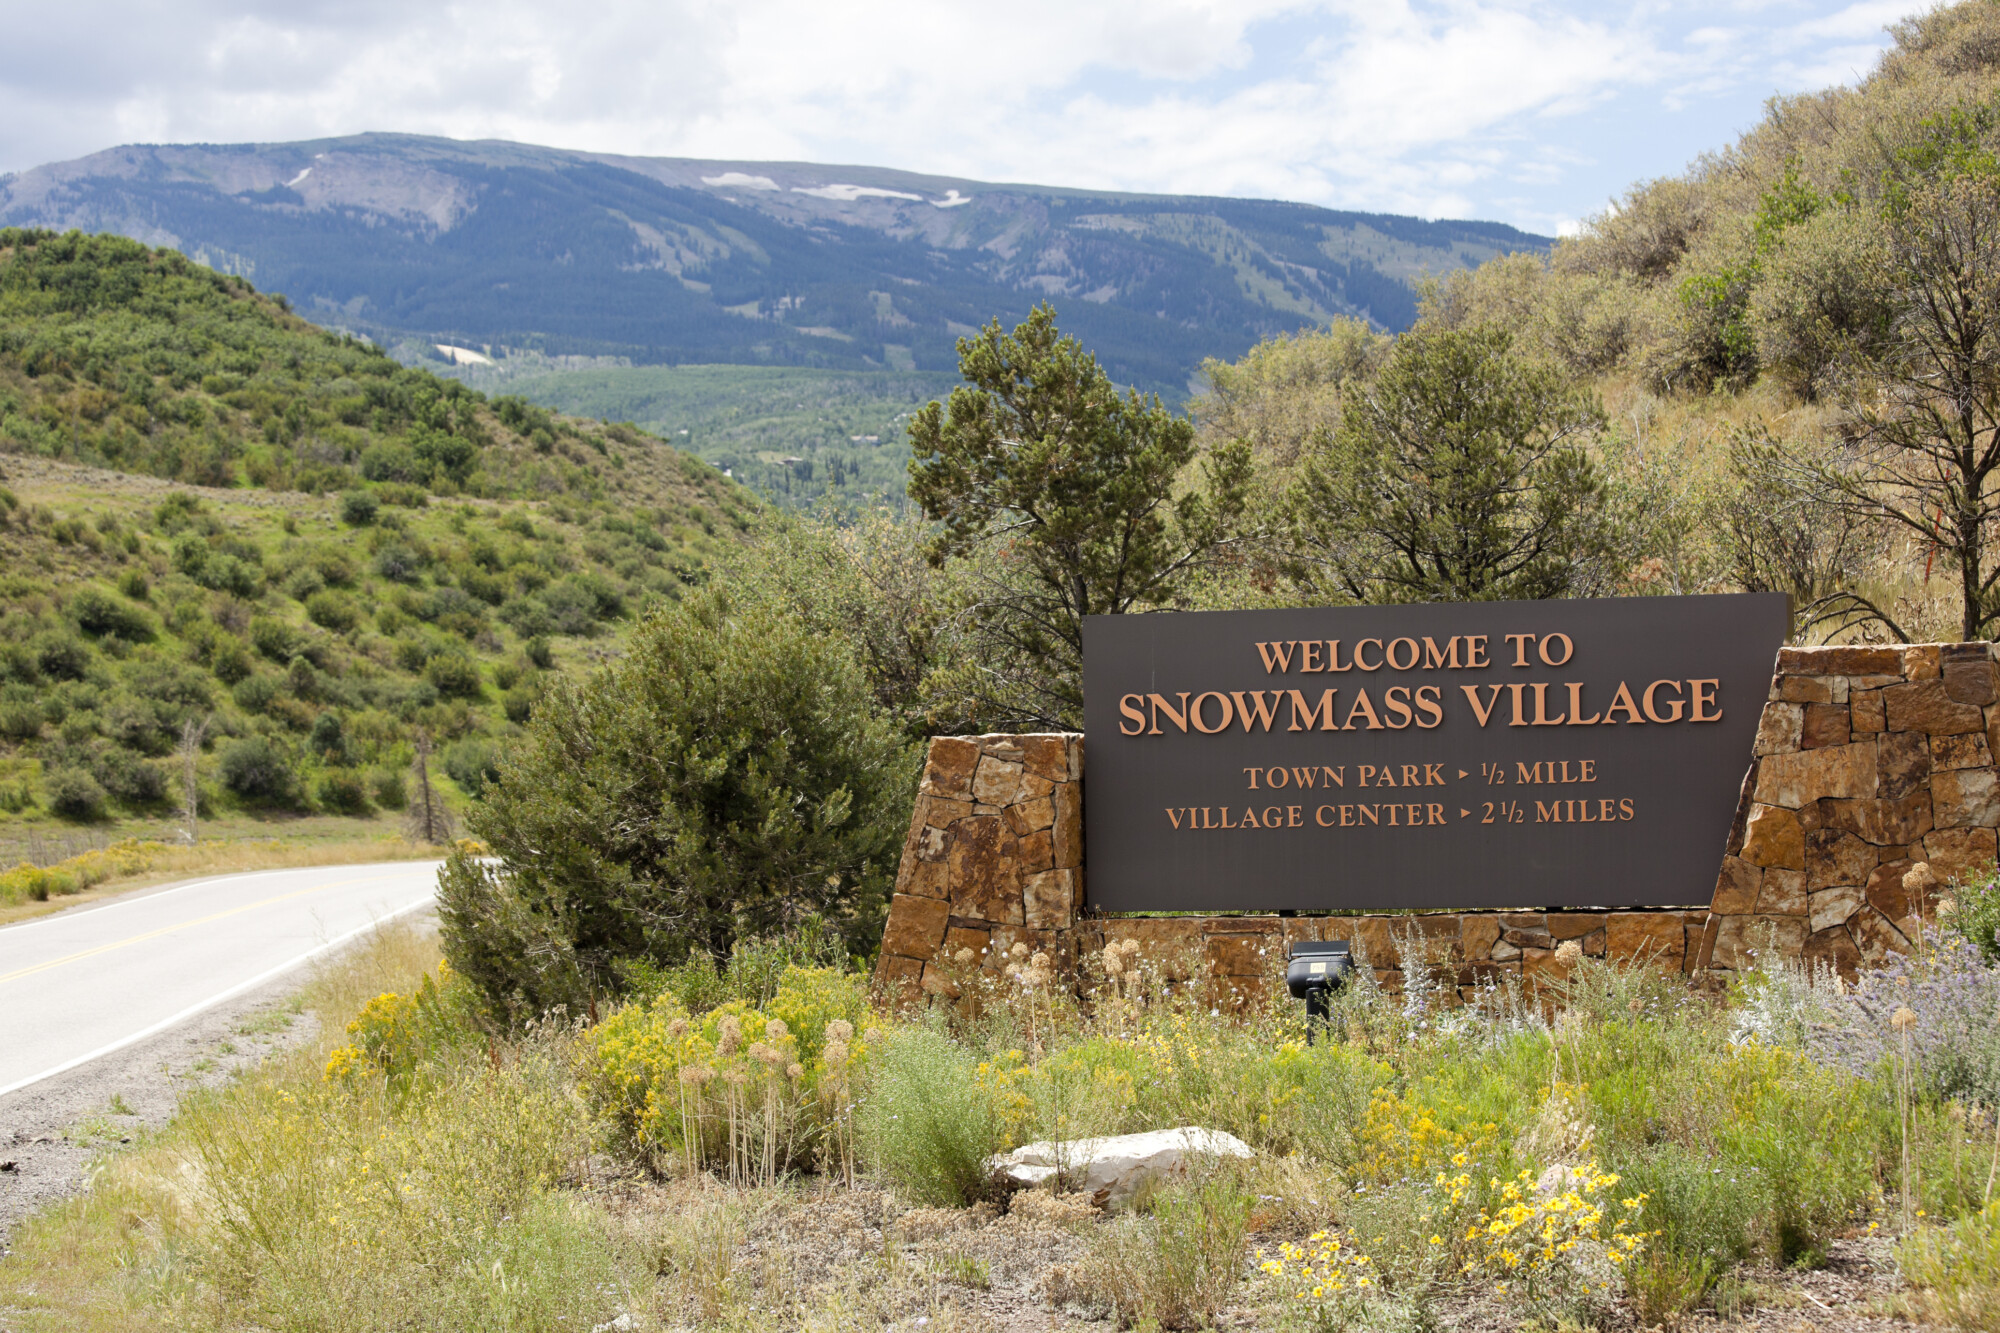 Sign for Snowmass Village, near Aspen, Colorado